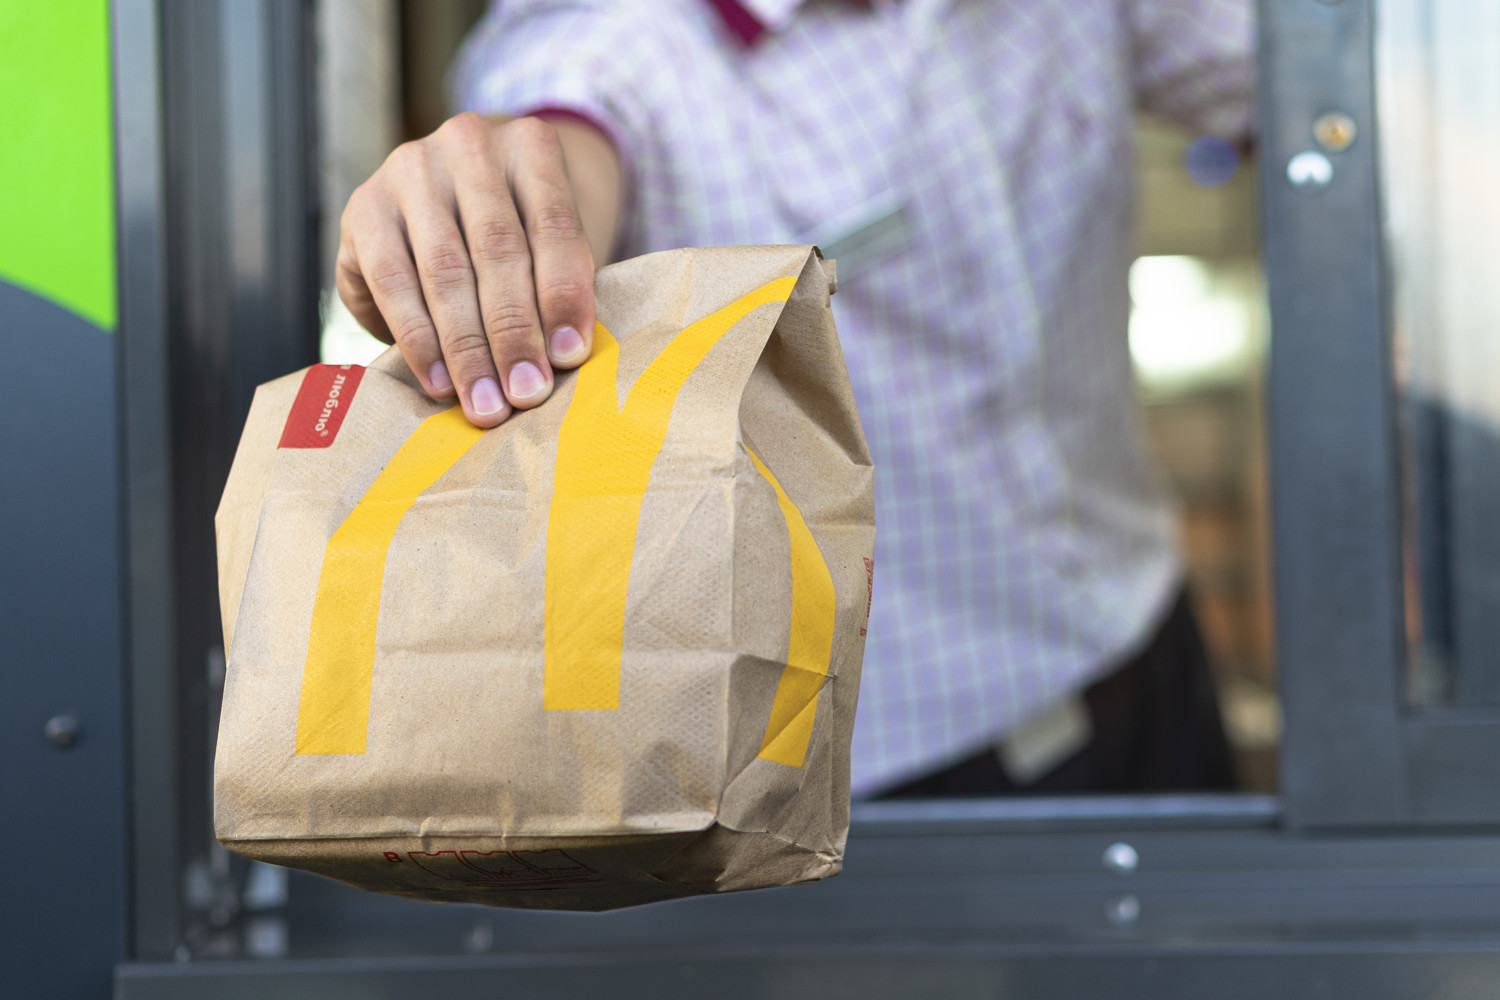 McDonald's drive-thru worker with bag